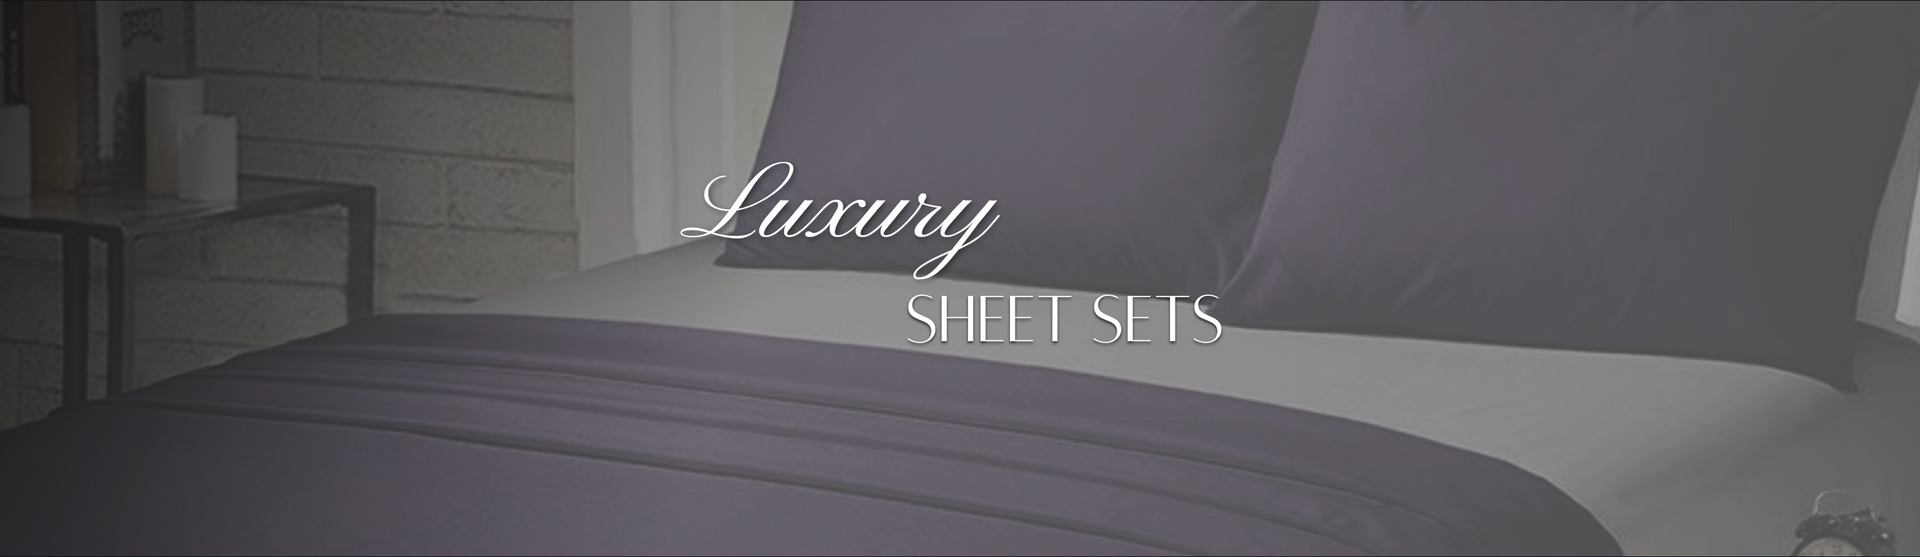 Bedding - Luxury - Sheet Sets